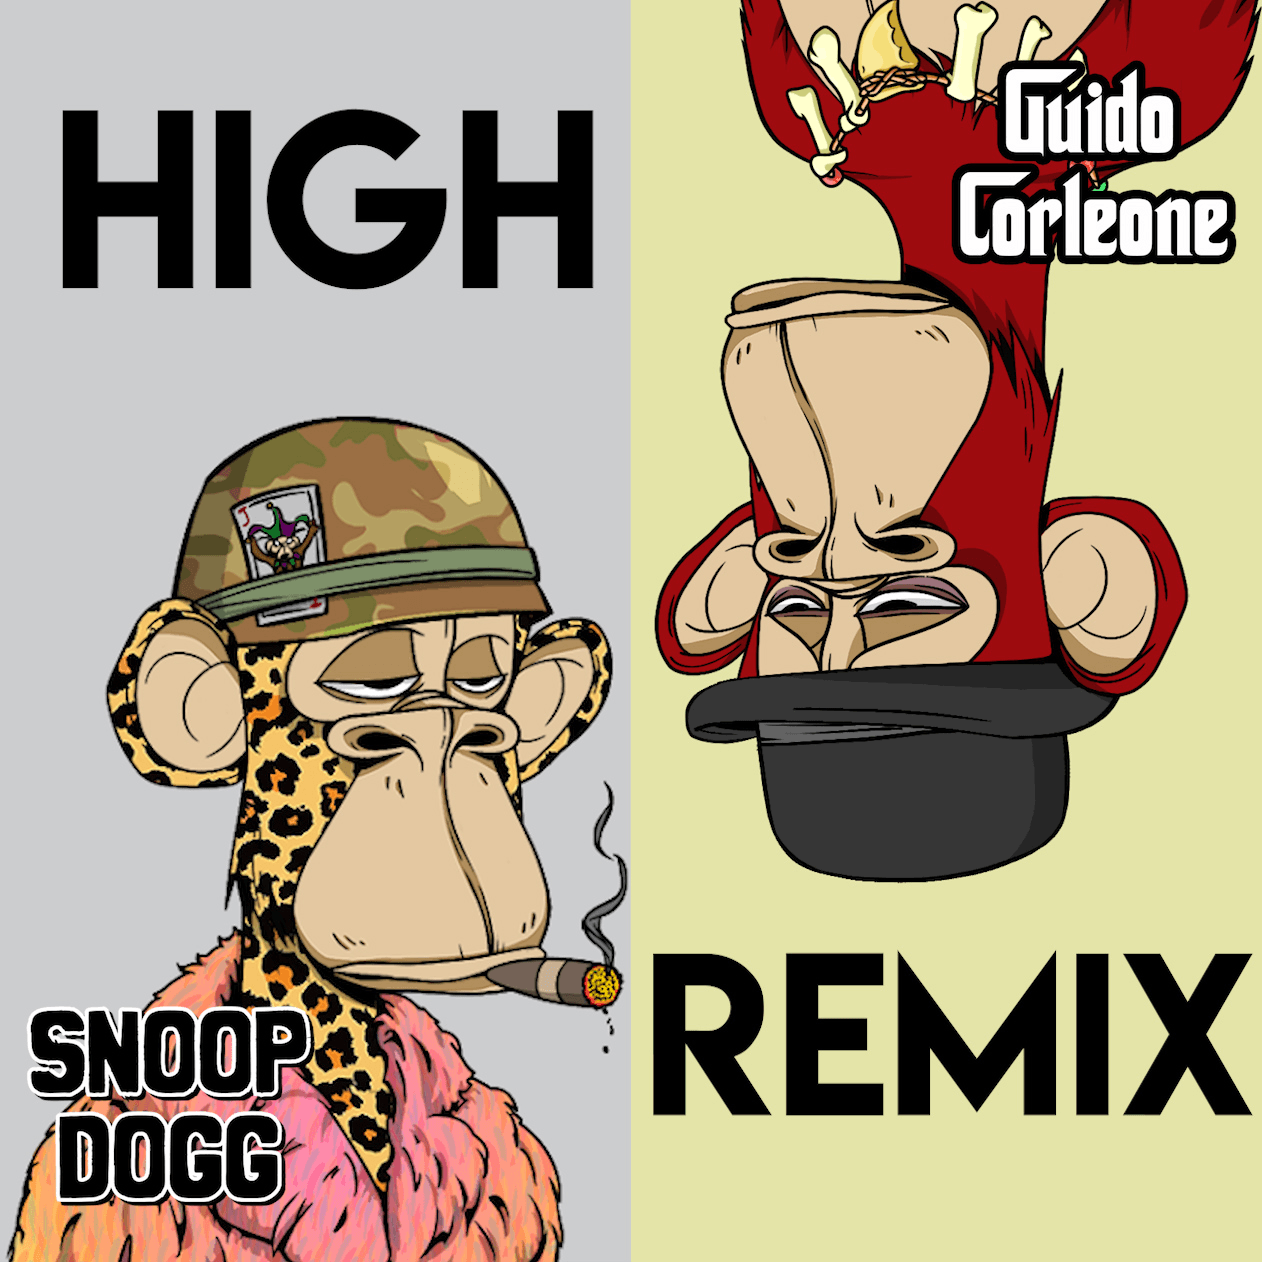 Snoop Dogg x Guido Corleone - High (Remix)